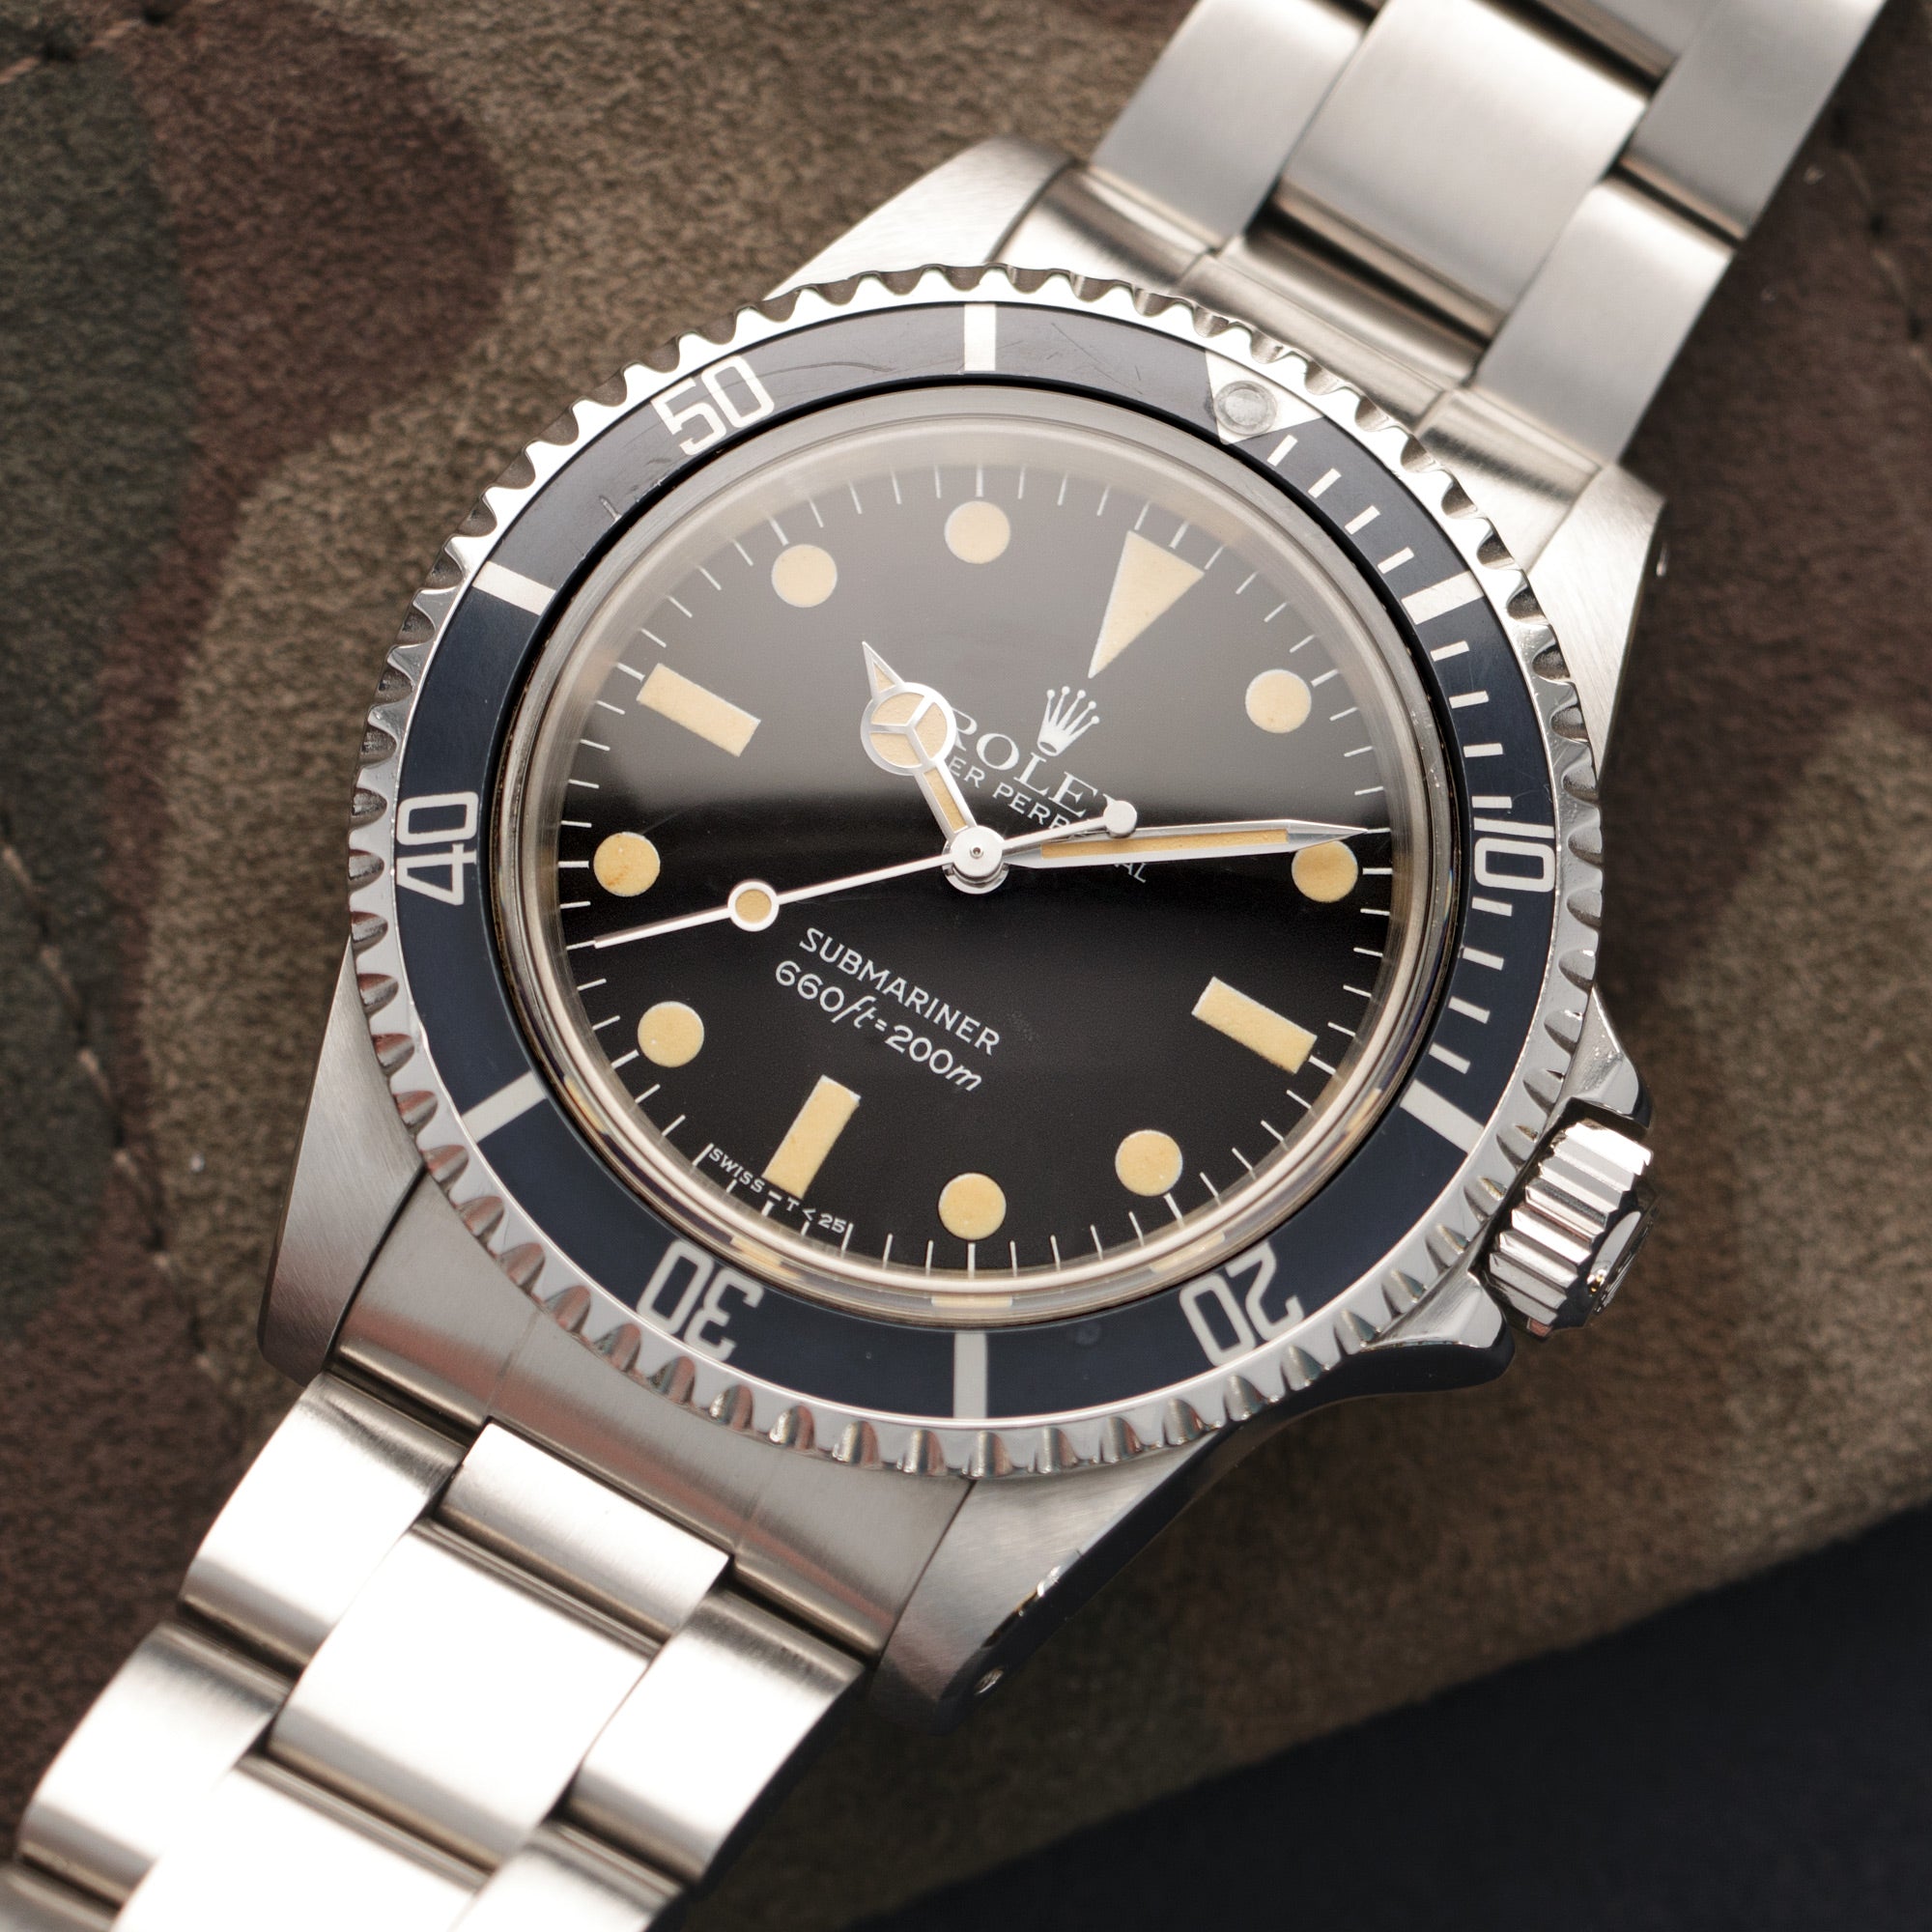 Rolex Submariner Maxi Dial Watch Ref. 5513